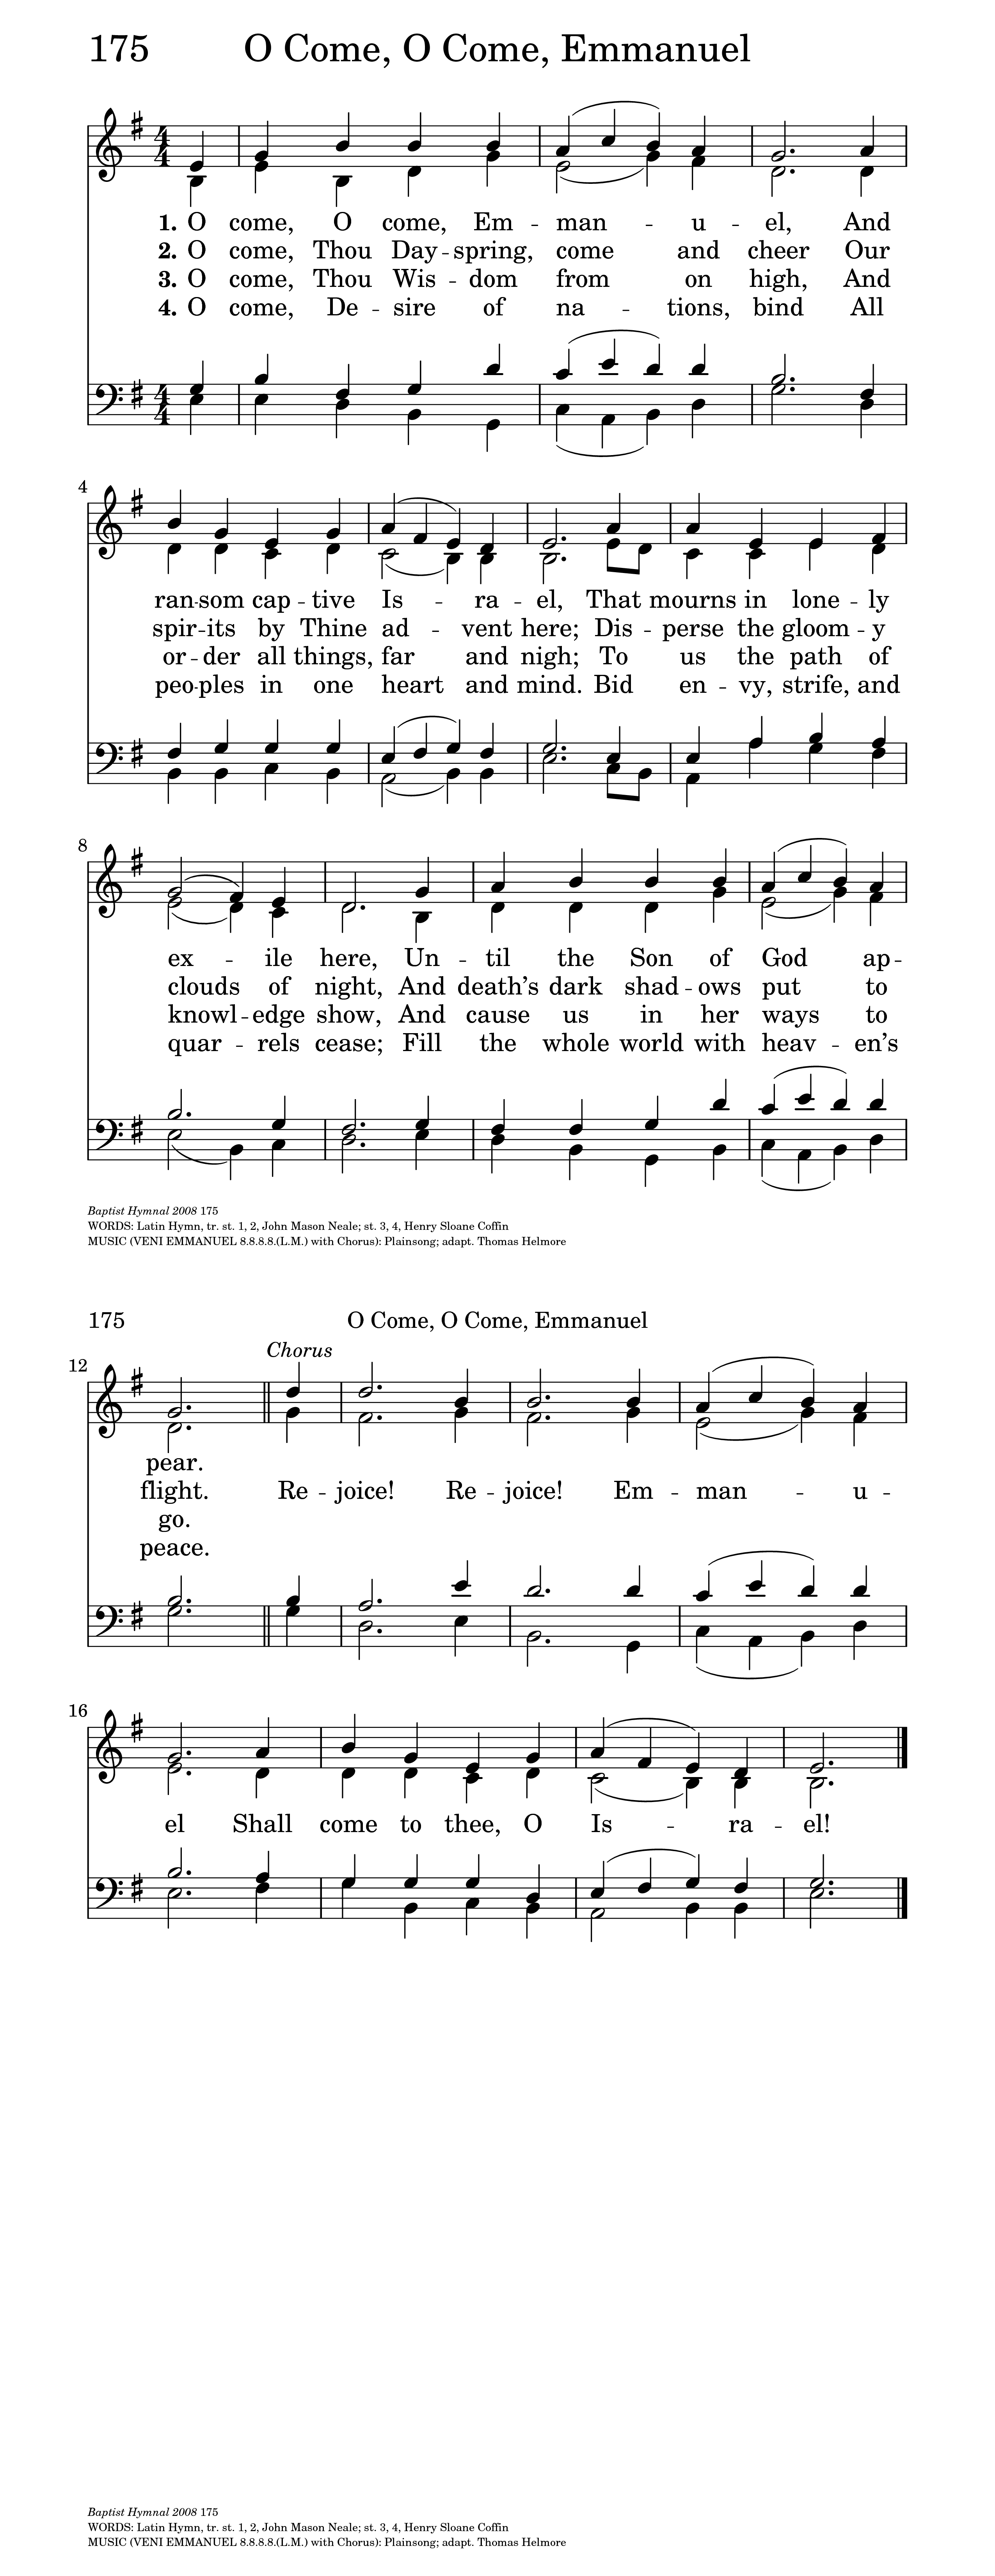 Good Old Hymns - God Is Everywhere - Lyrics, Sheetmusic, midi, Mp3